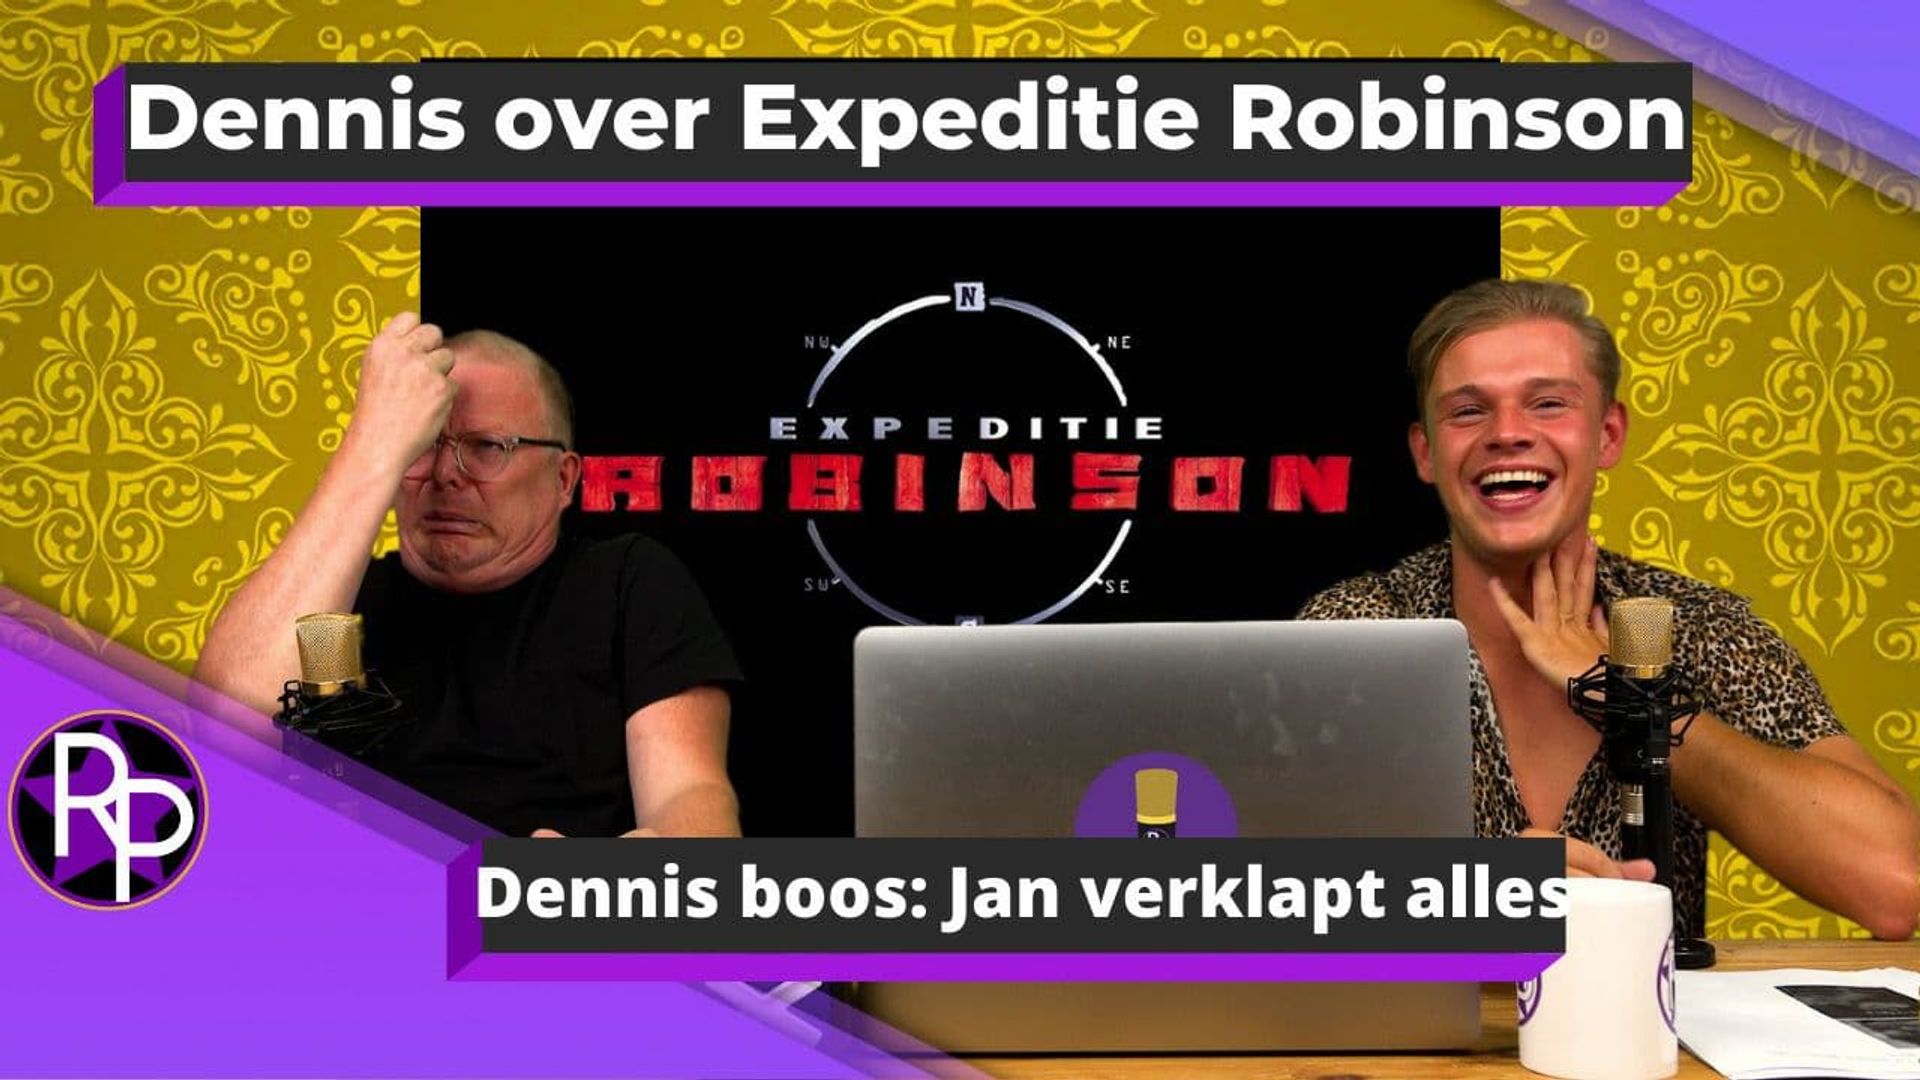 Dennis over Expeditie Robinson